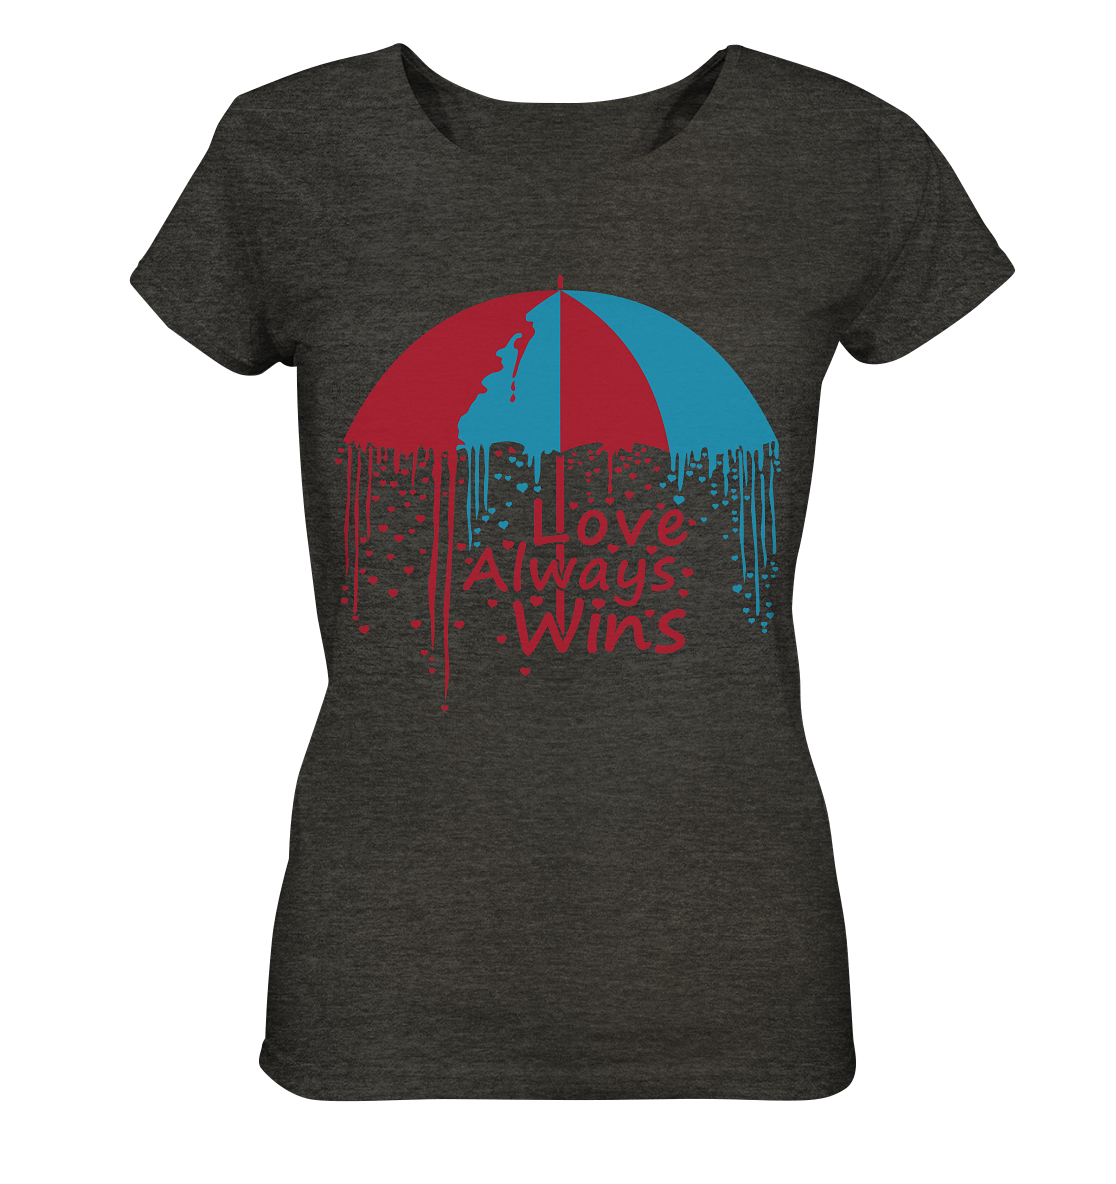 Love always wins - Ladies Organic Shirt (mottled)